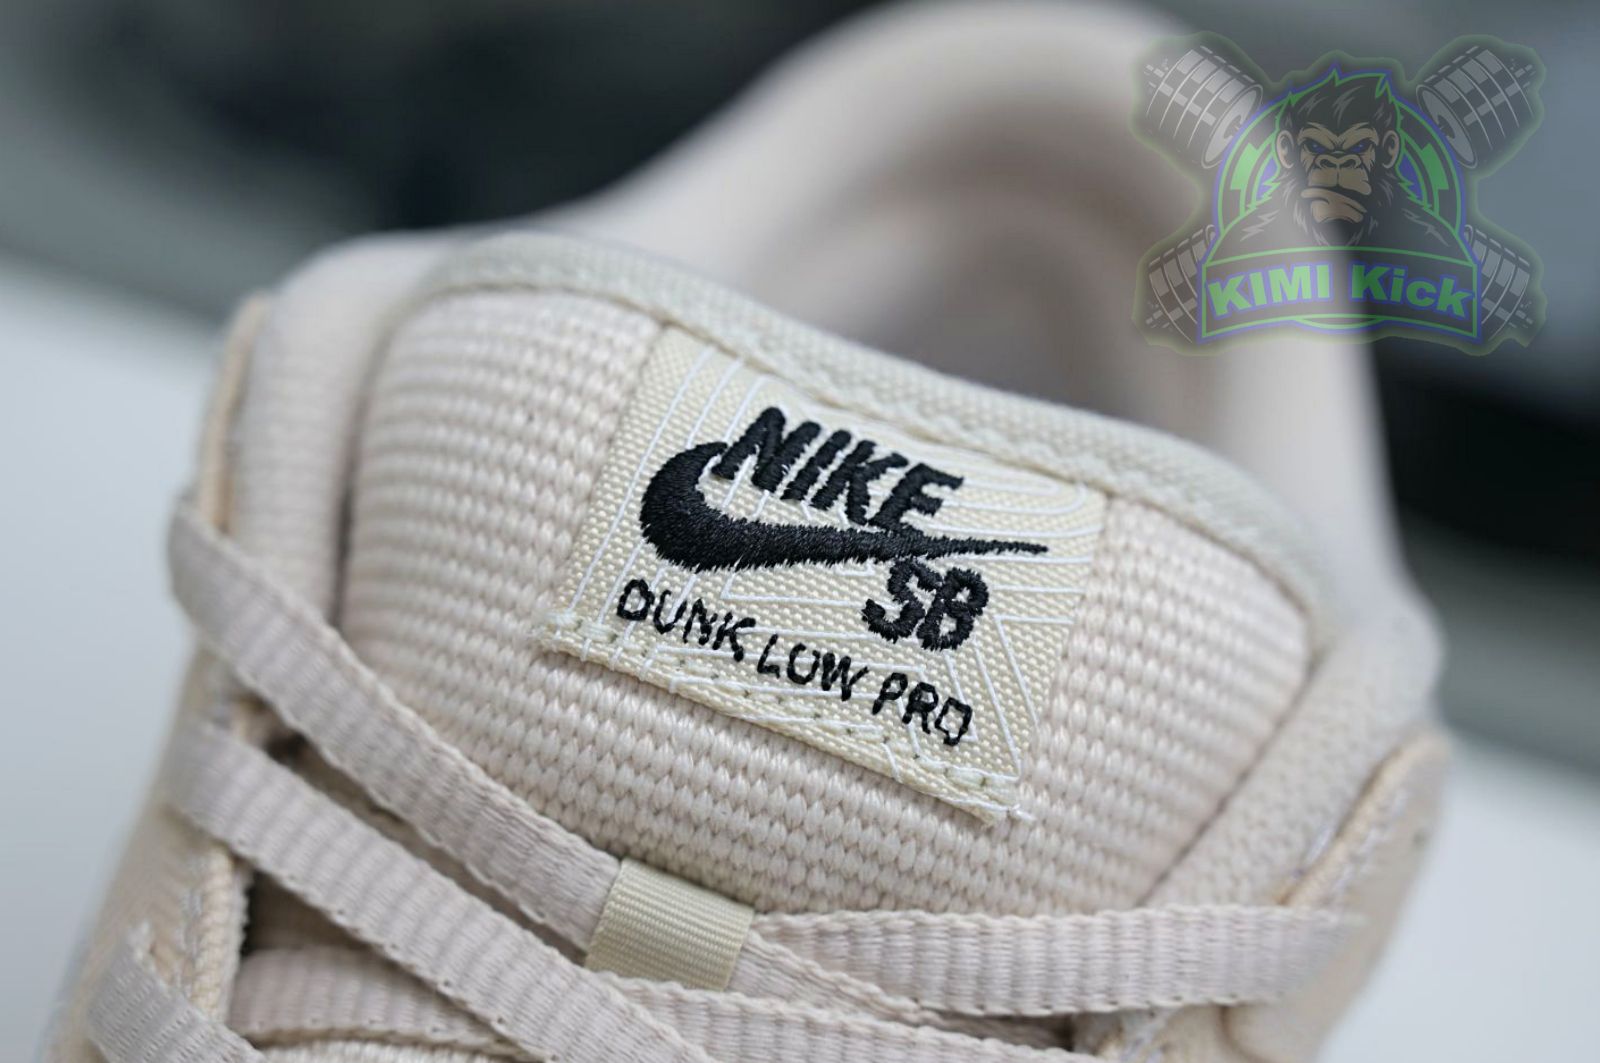 Albino & Preto x Nike Dunk SB Low Pro "Pearl White"